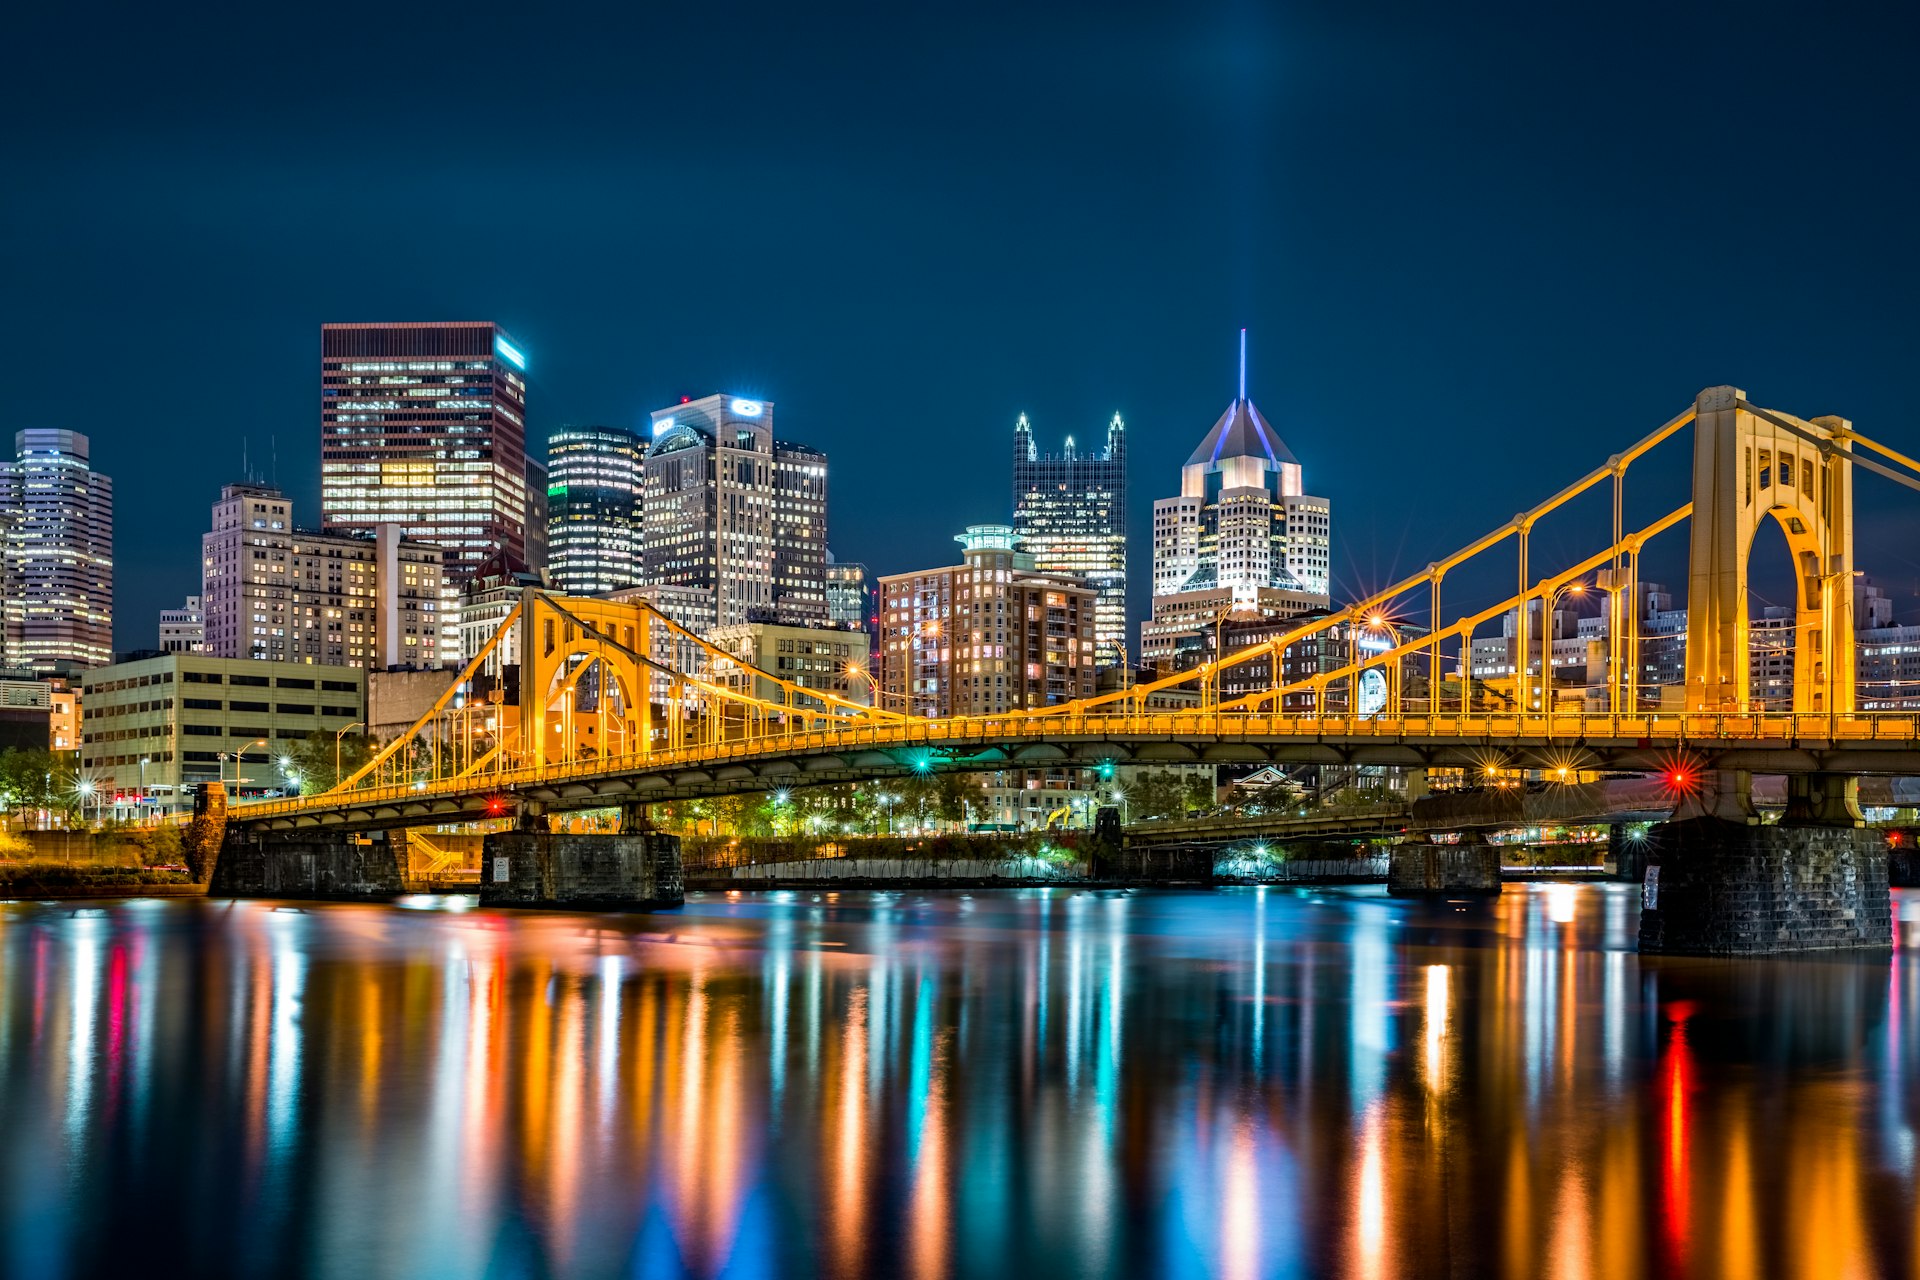 The Rachel Carson Bridge (aka Ninth Street Bridge) spans Allegheny river in Pittsburgh at night